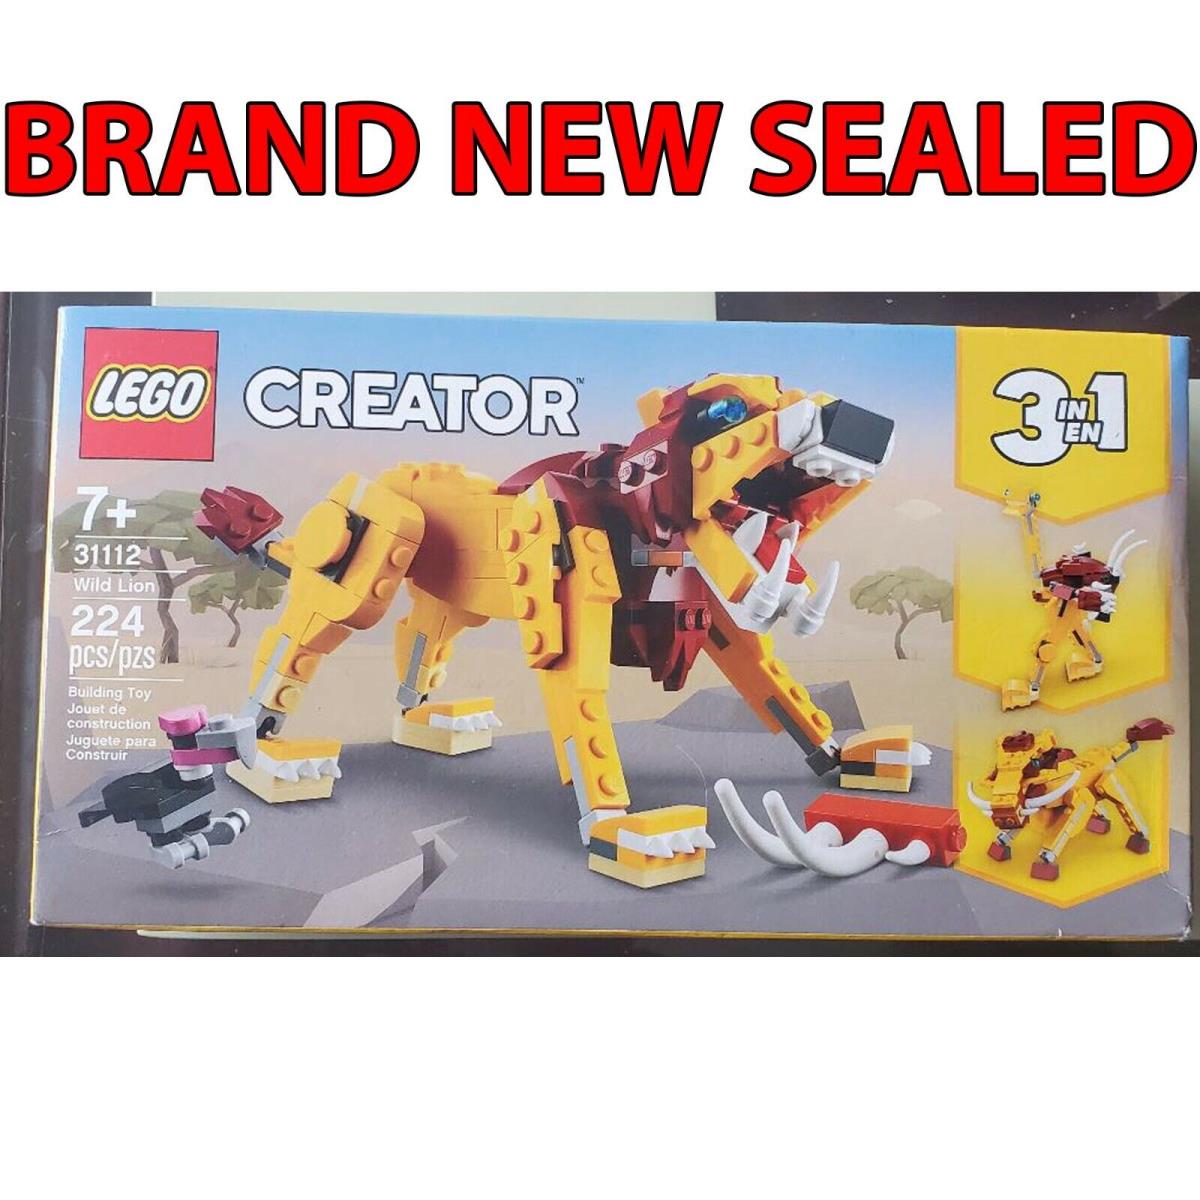 Lego Creator 3in1 Wild Lion Animal Lego Toy Building Kit Set 31112